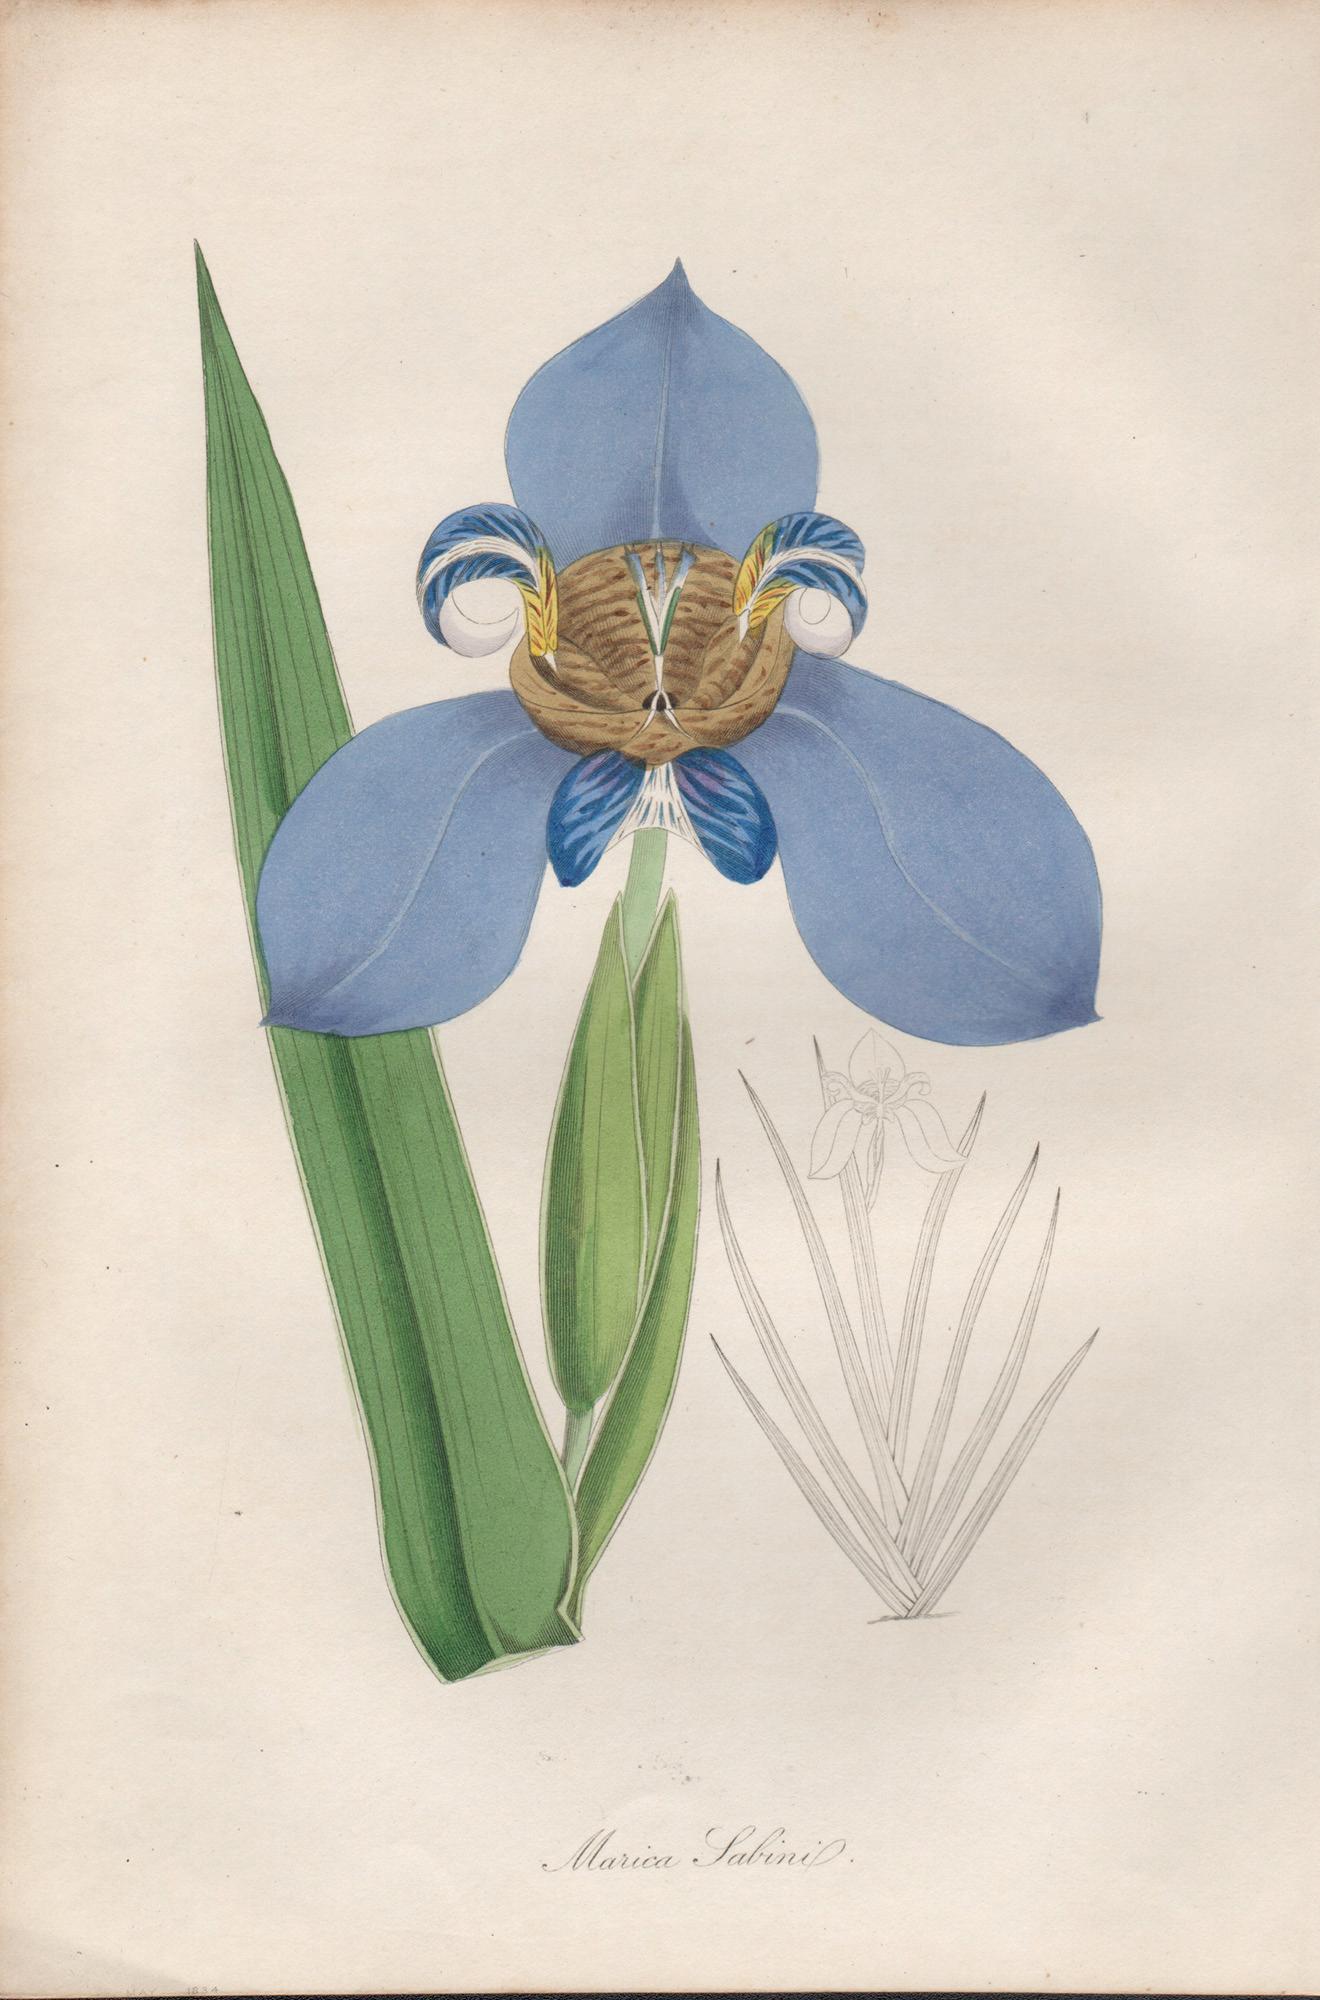 Frederick William Smith Print - Marica Sabini, antique botanical blue flower engraving